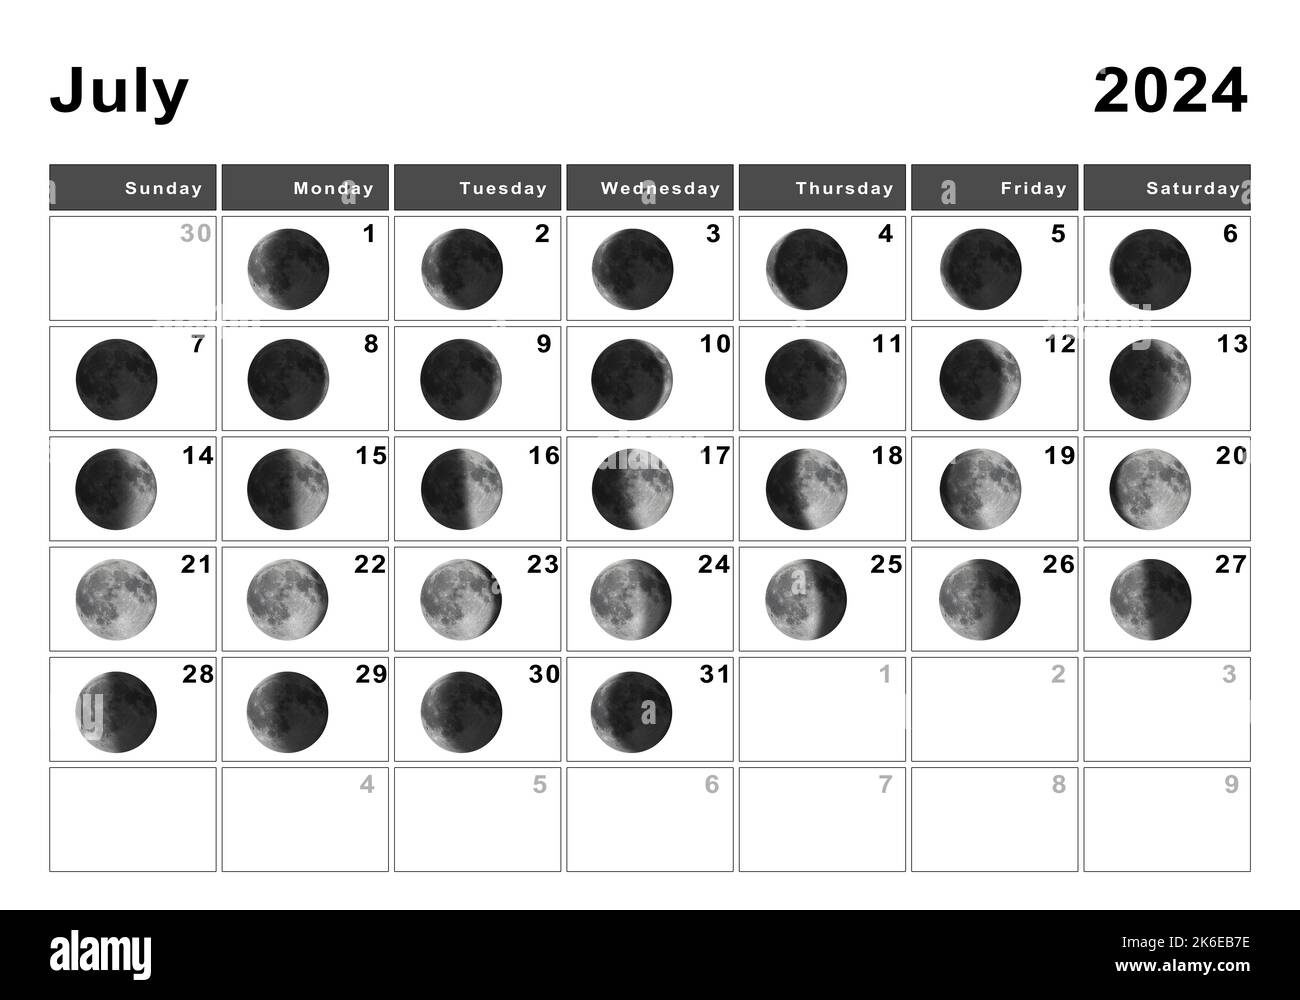 July 2024 Lunar Calendar, Moon Cycles, Moon Phases Stock Photo - Alamy with July 12th Lunar Calendar 2024